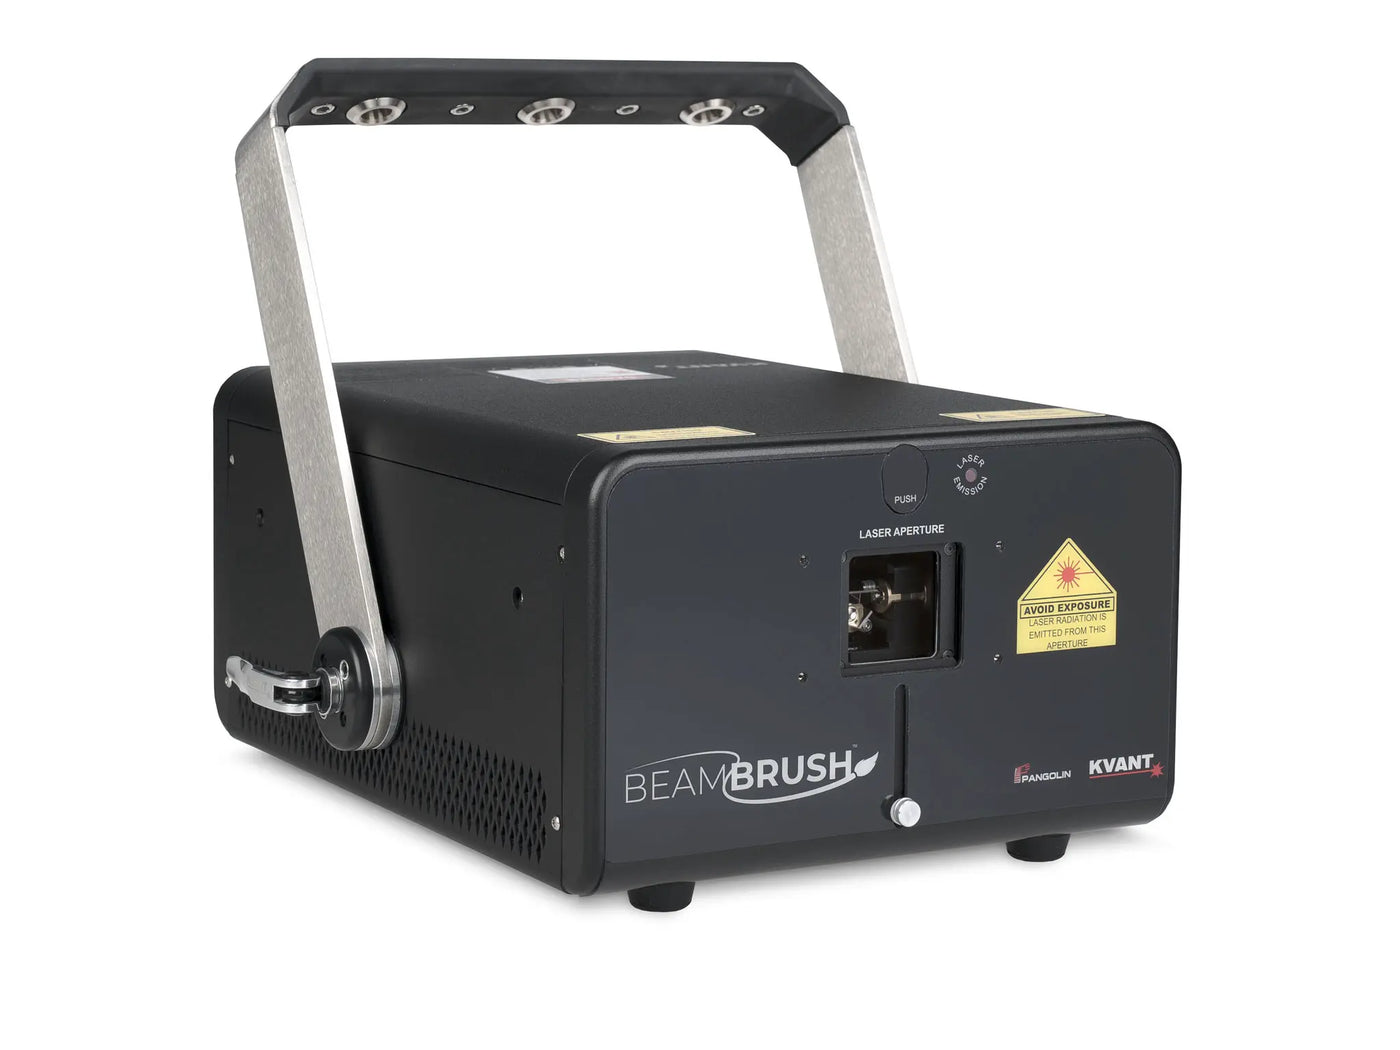 Pangolin and Kvant Beam Brush® laser projector